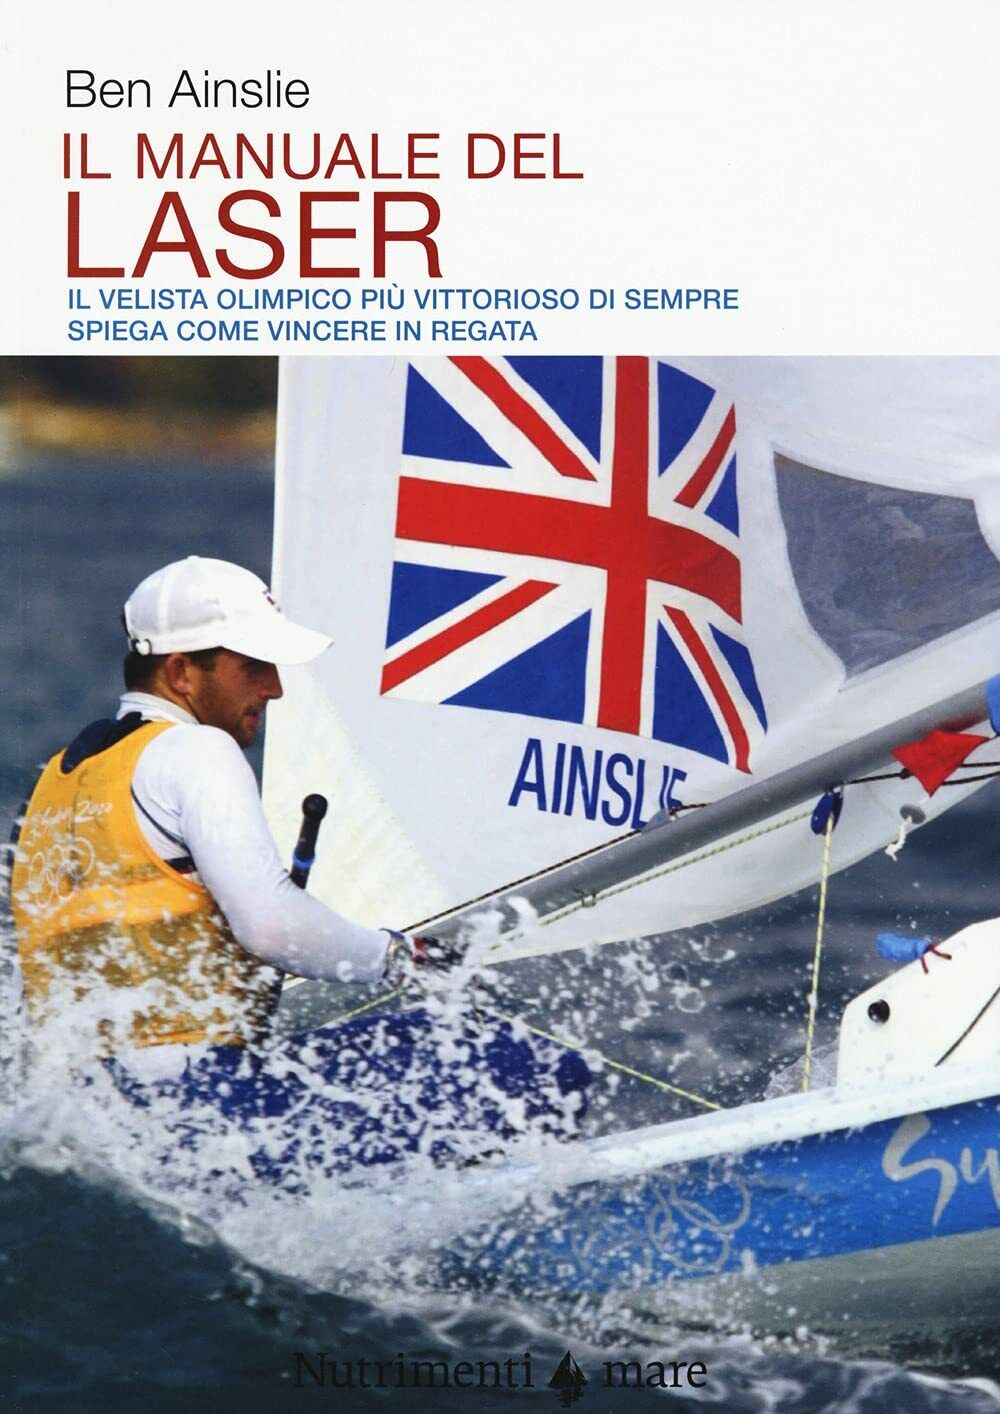 Il manuale del laser - Ben Ainslie - Nutrimenti, 2021